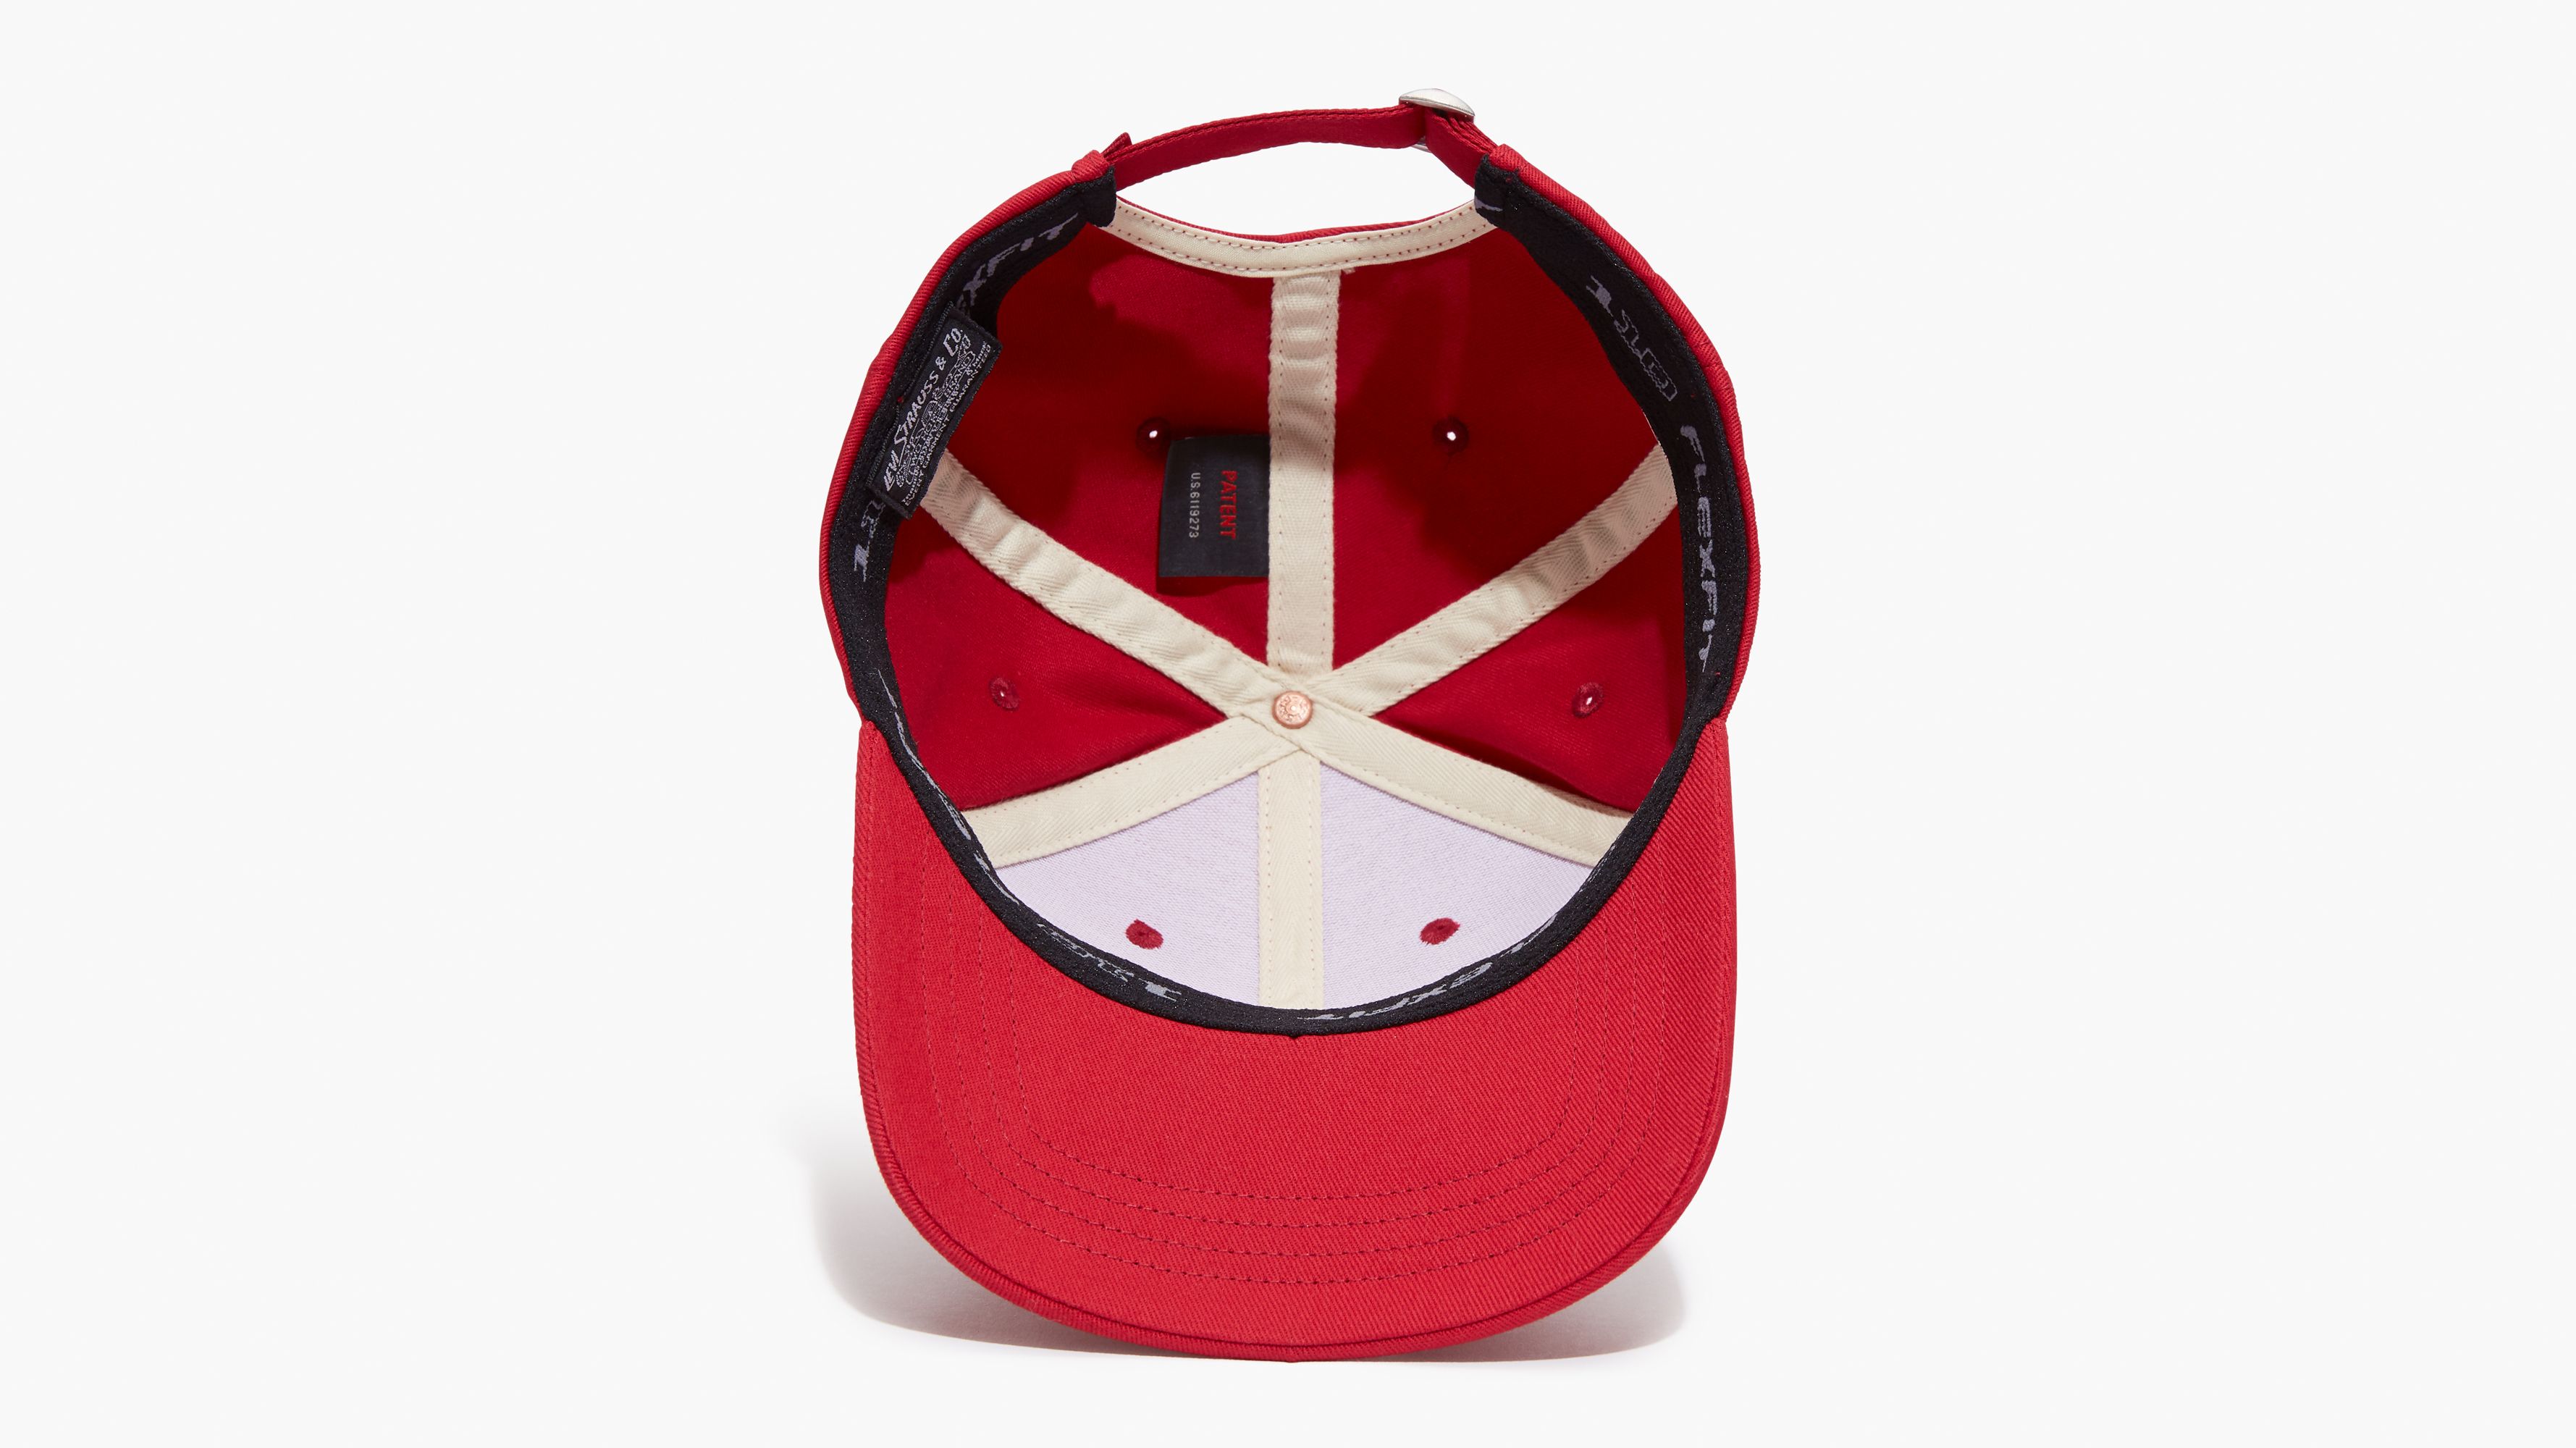 Unisex Baseball Cap Red